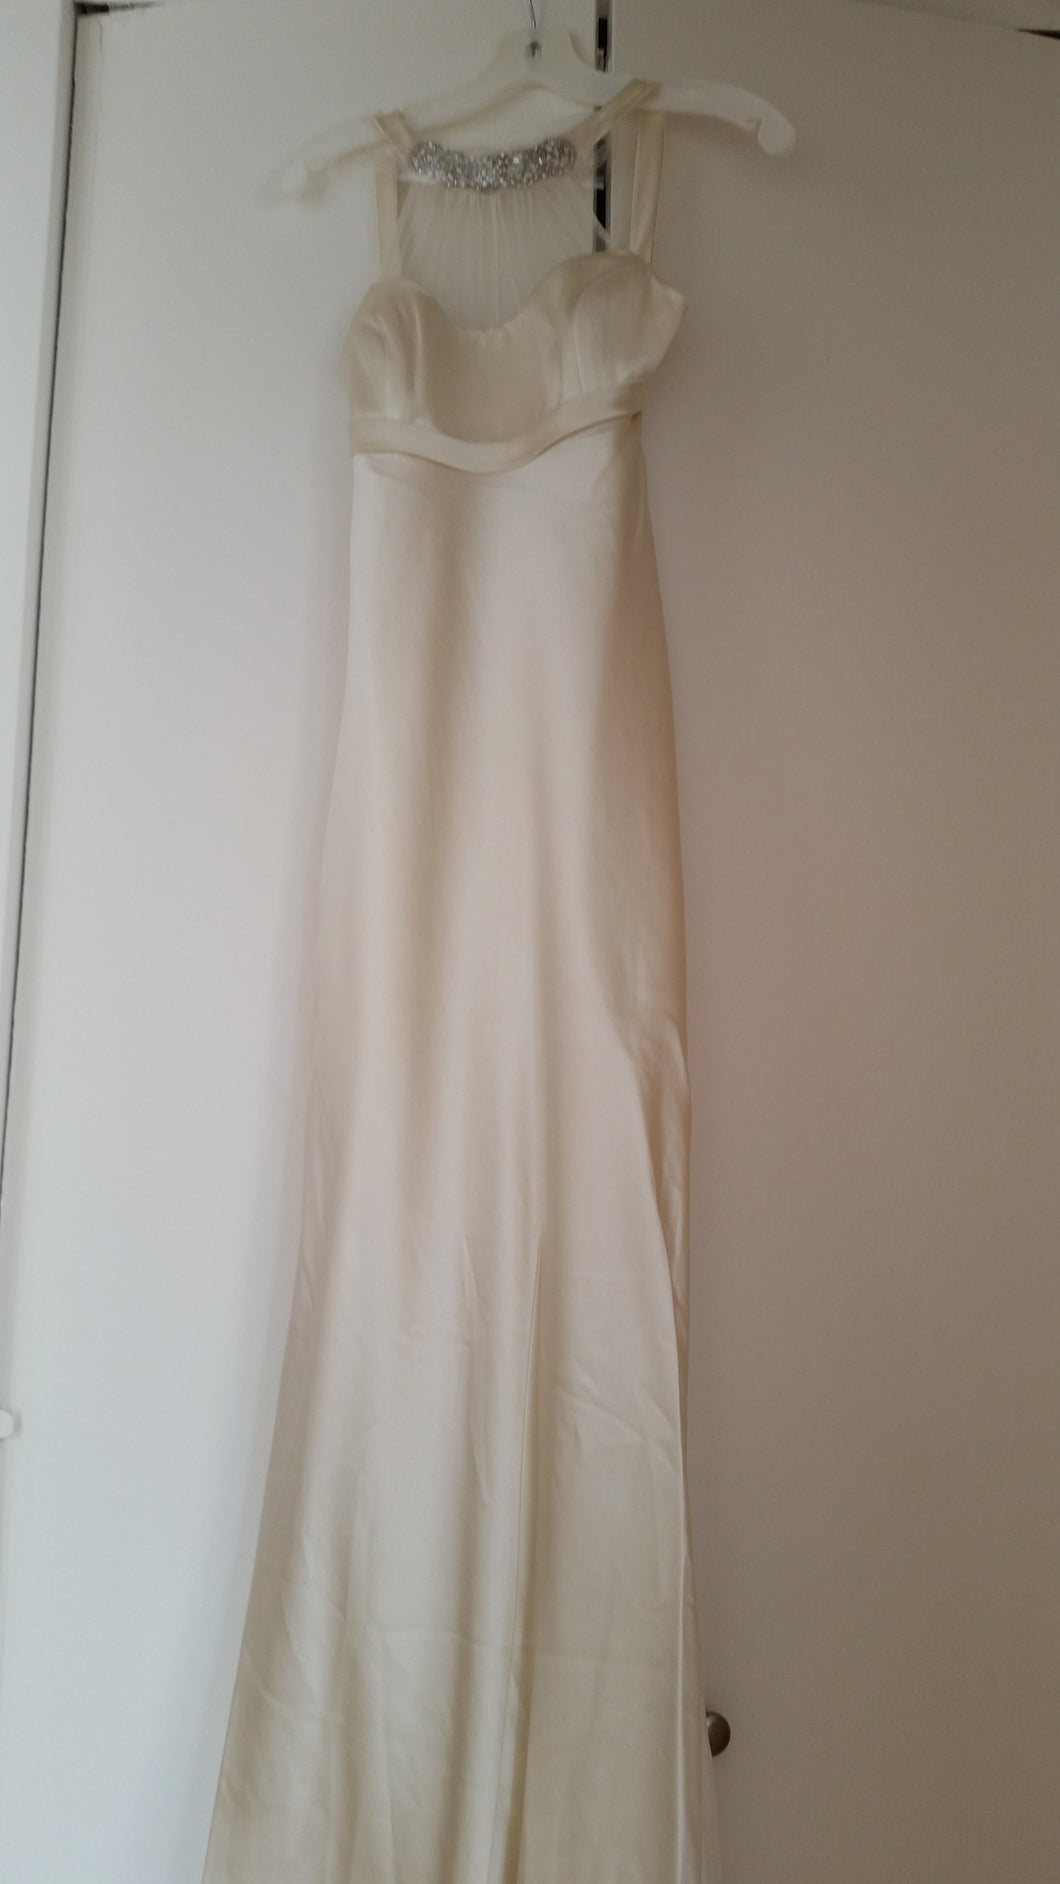 Rivini 'Eros' size 2 new wedding dress front view on hanger